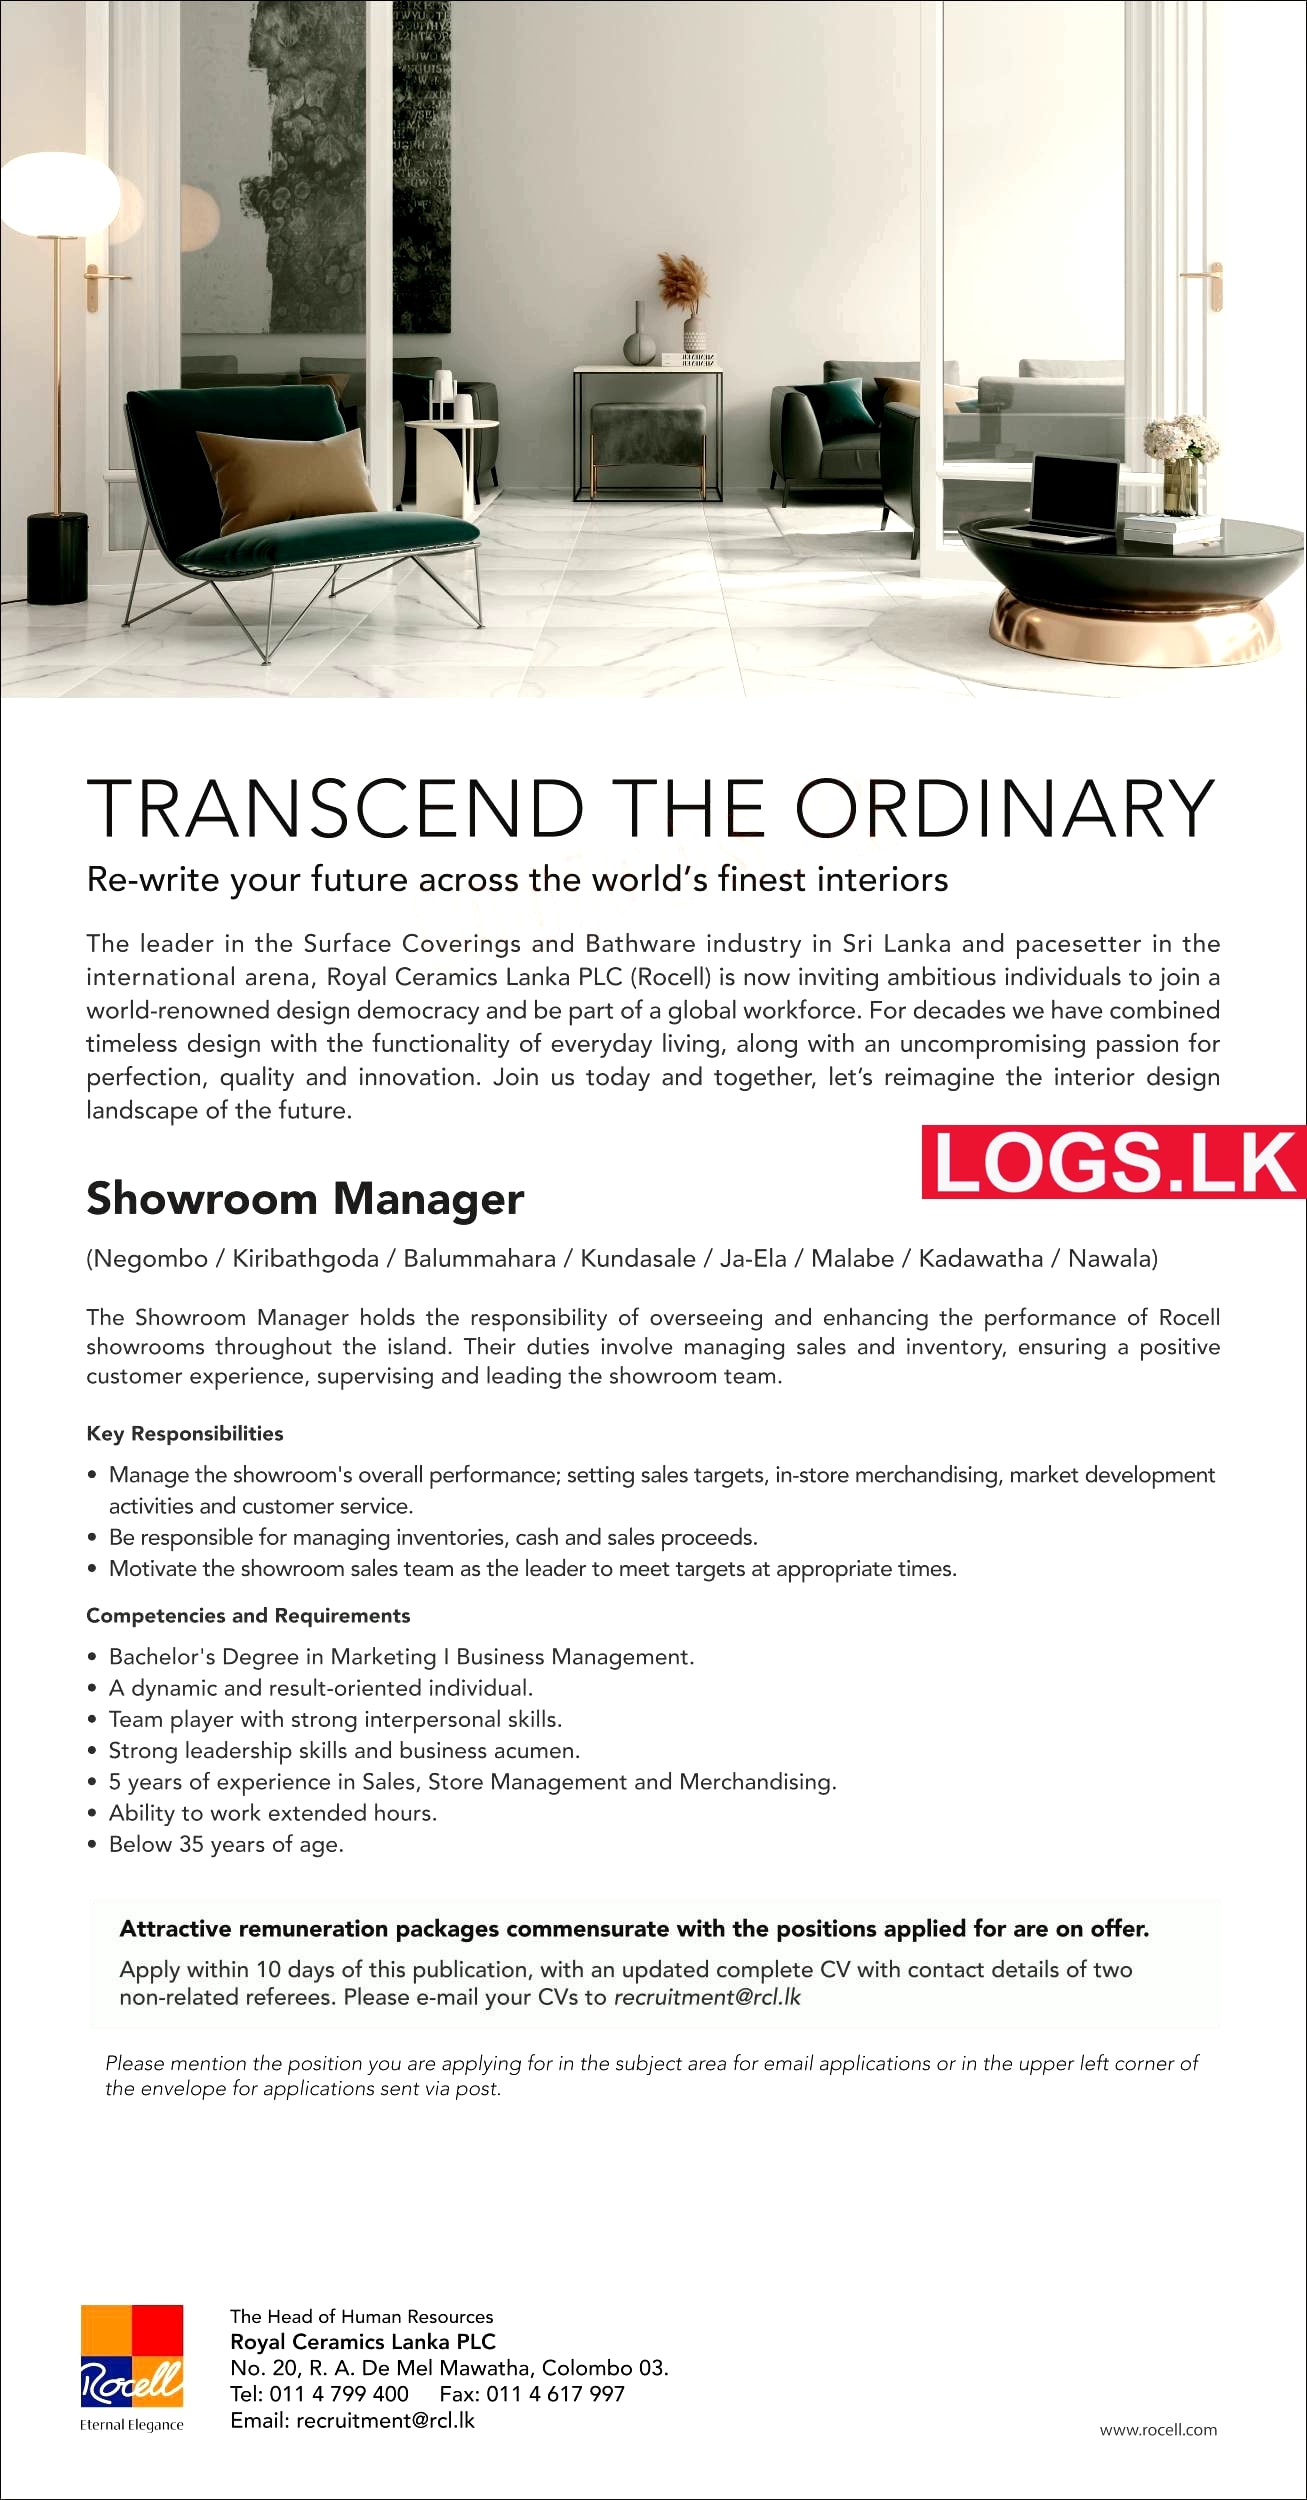 Showroom Manager Job Vacancy in Royal Ceramics Lanka PLC Job Vacancies in Sri Lanka